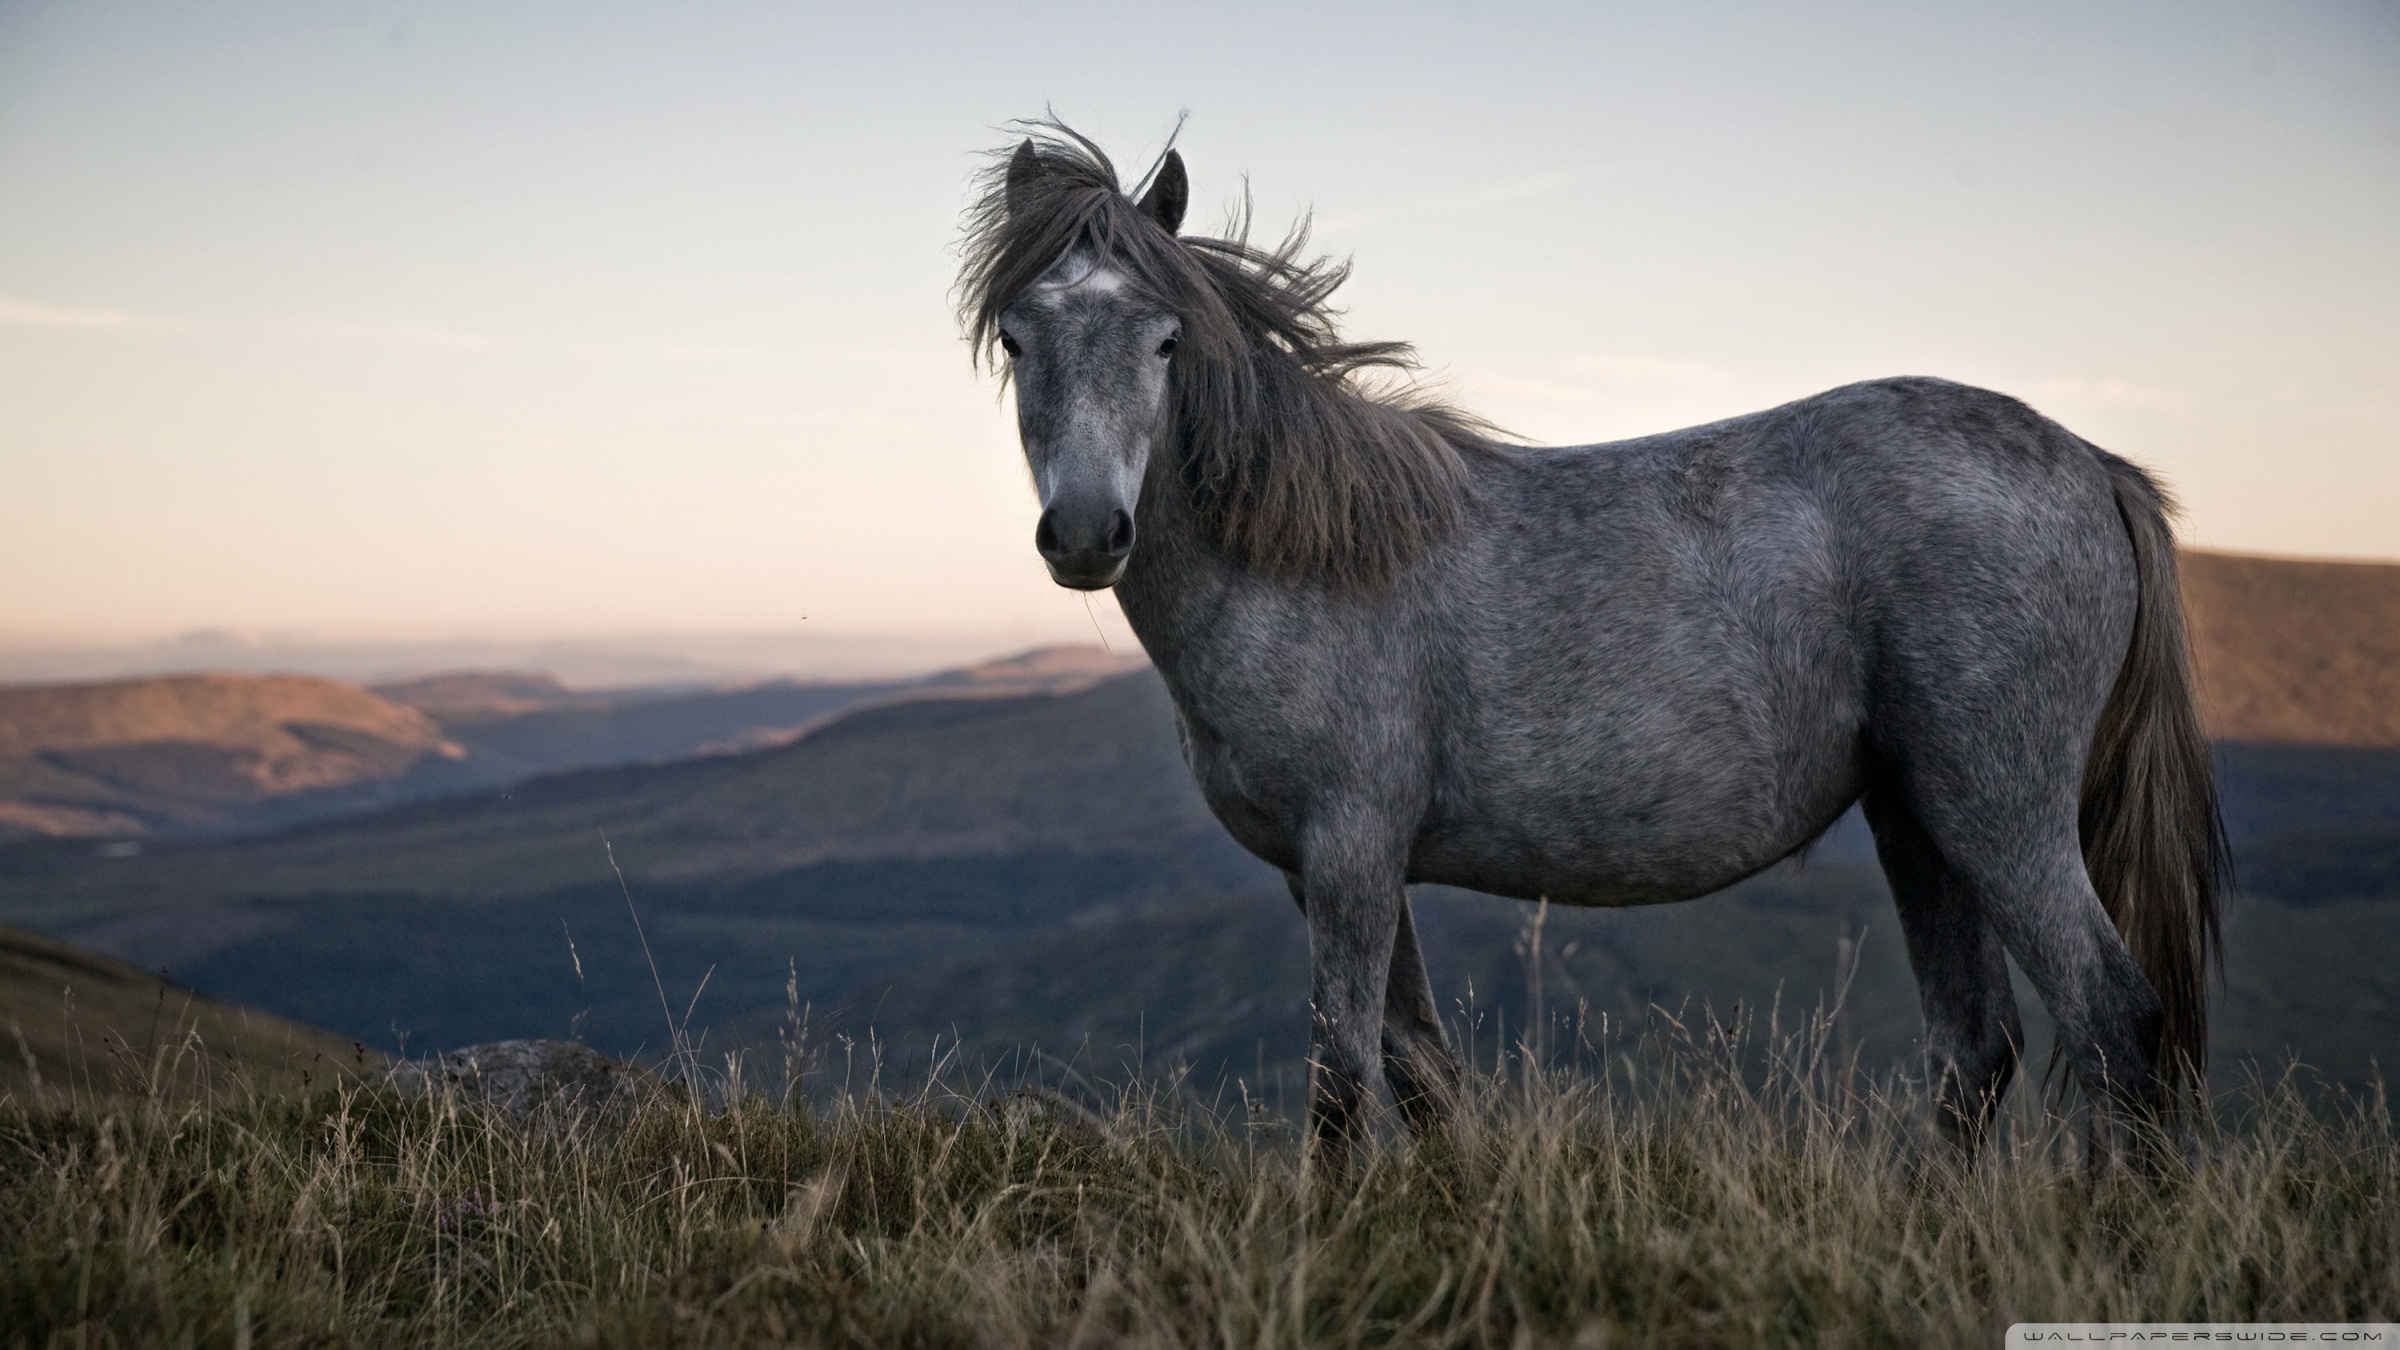 80,217 Horse Wallpaper Images, Stock Photos & Vectors | Shutterstock